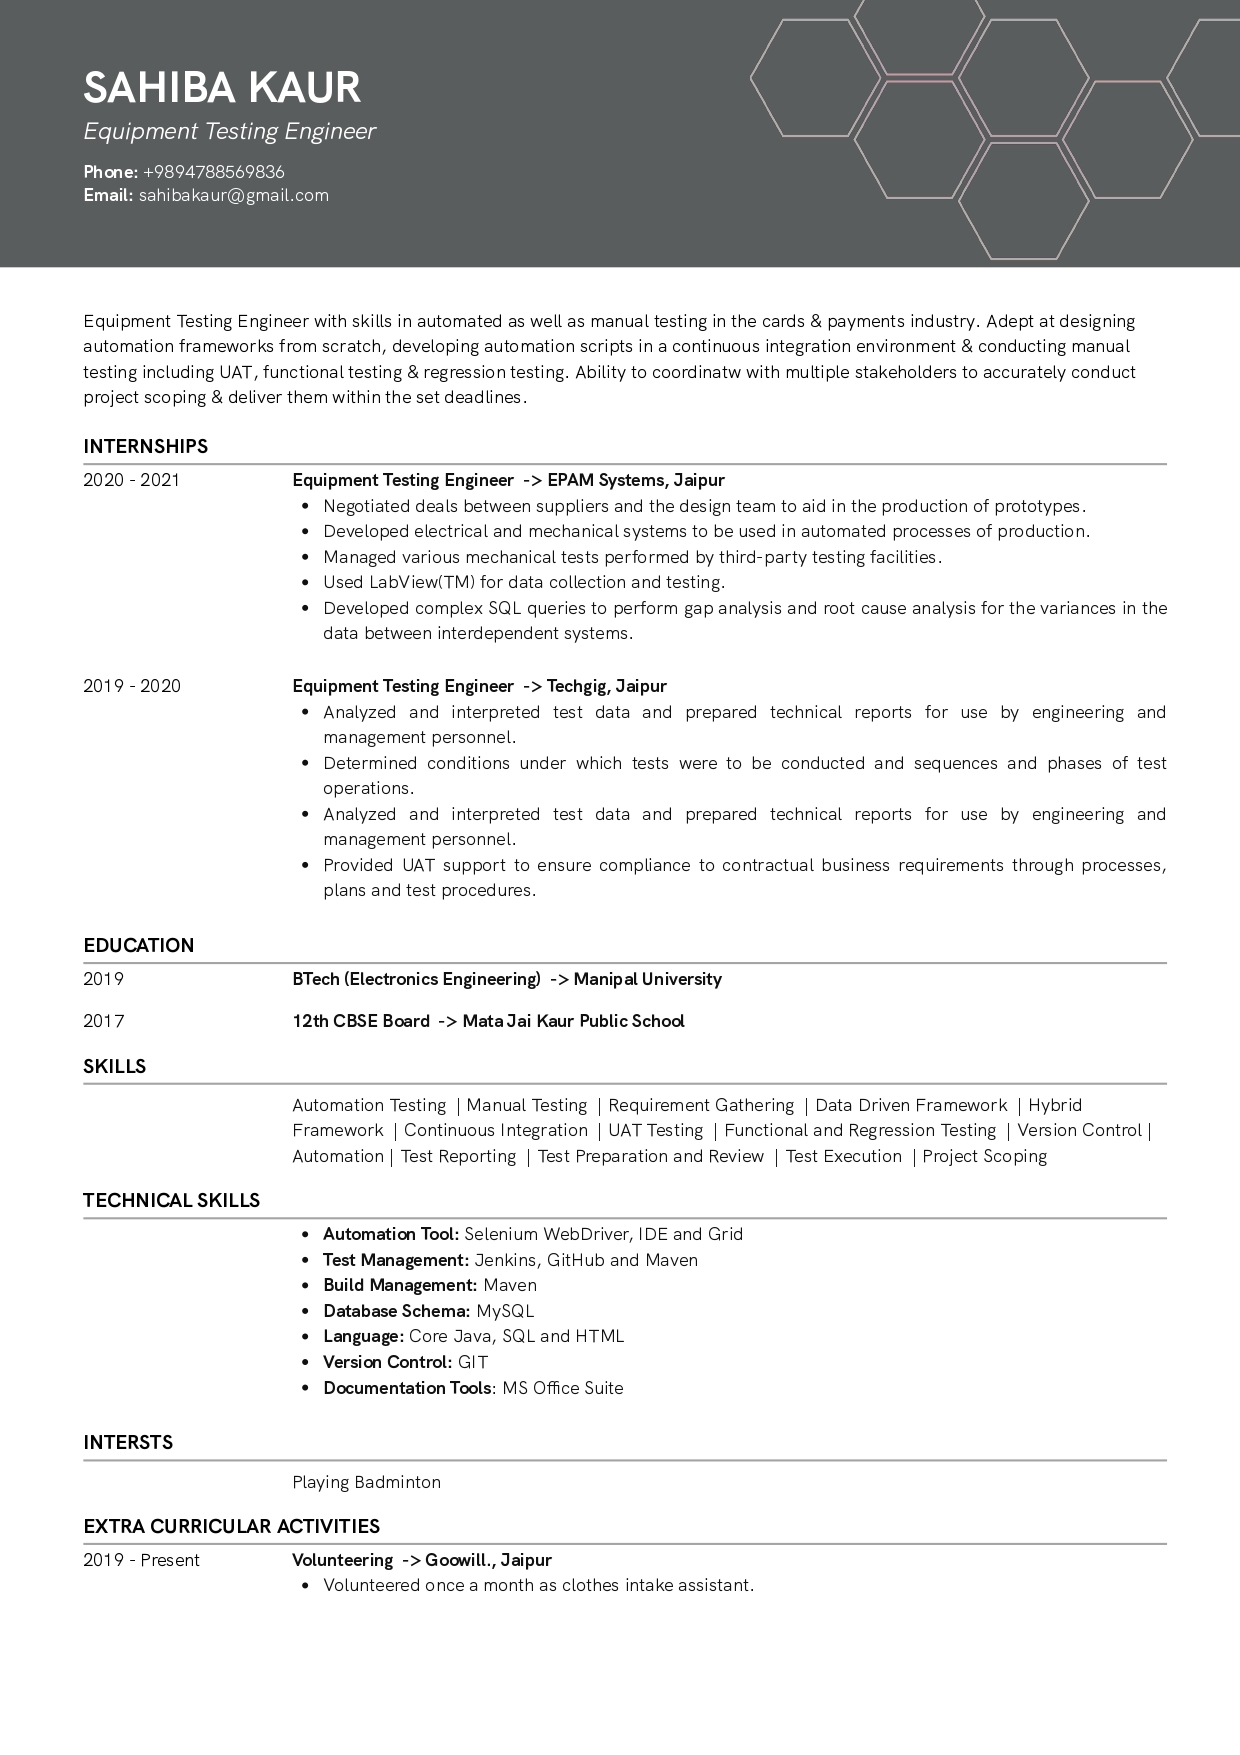 Resume of Equipment Testing Engineer